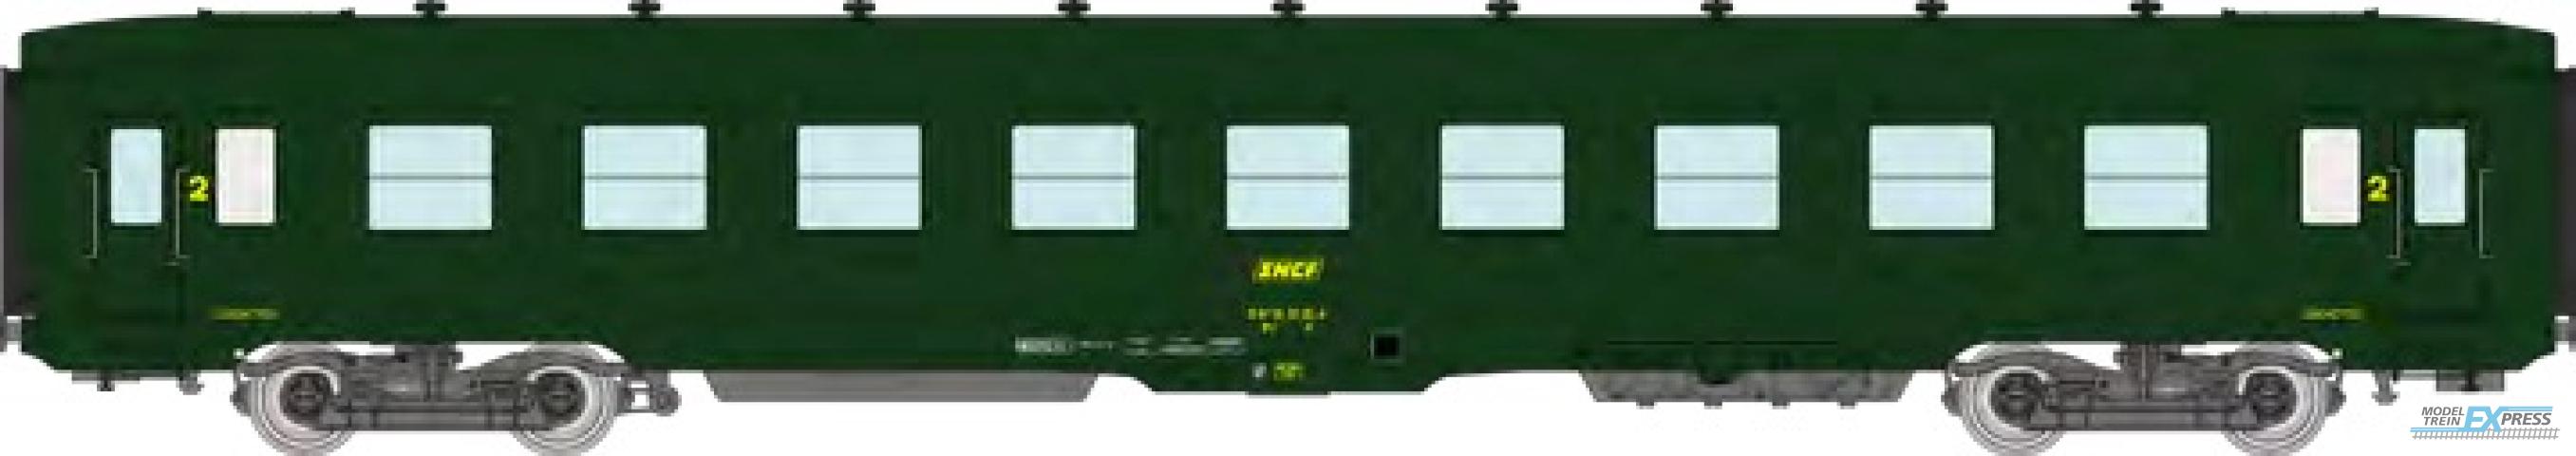 REE models VB-406 U52 DEV AO Sleeping Cars B9c9 N° 51 87 59-37 131-4 Green 301, boxed SNCF logo Era IV